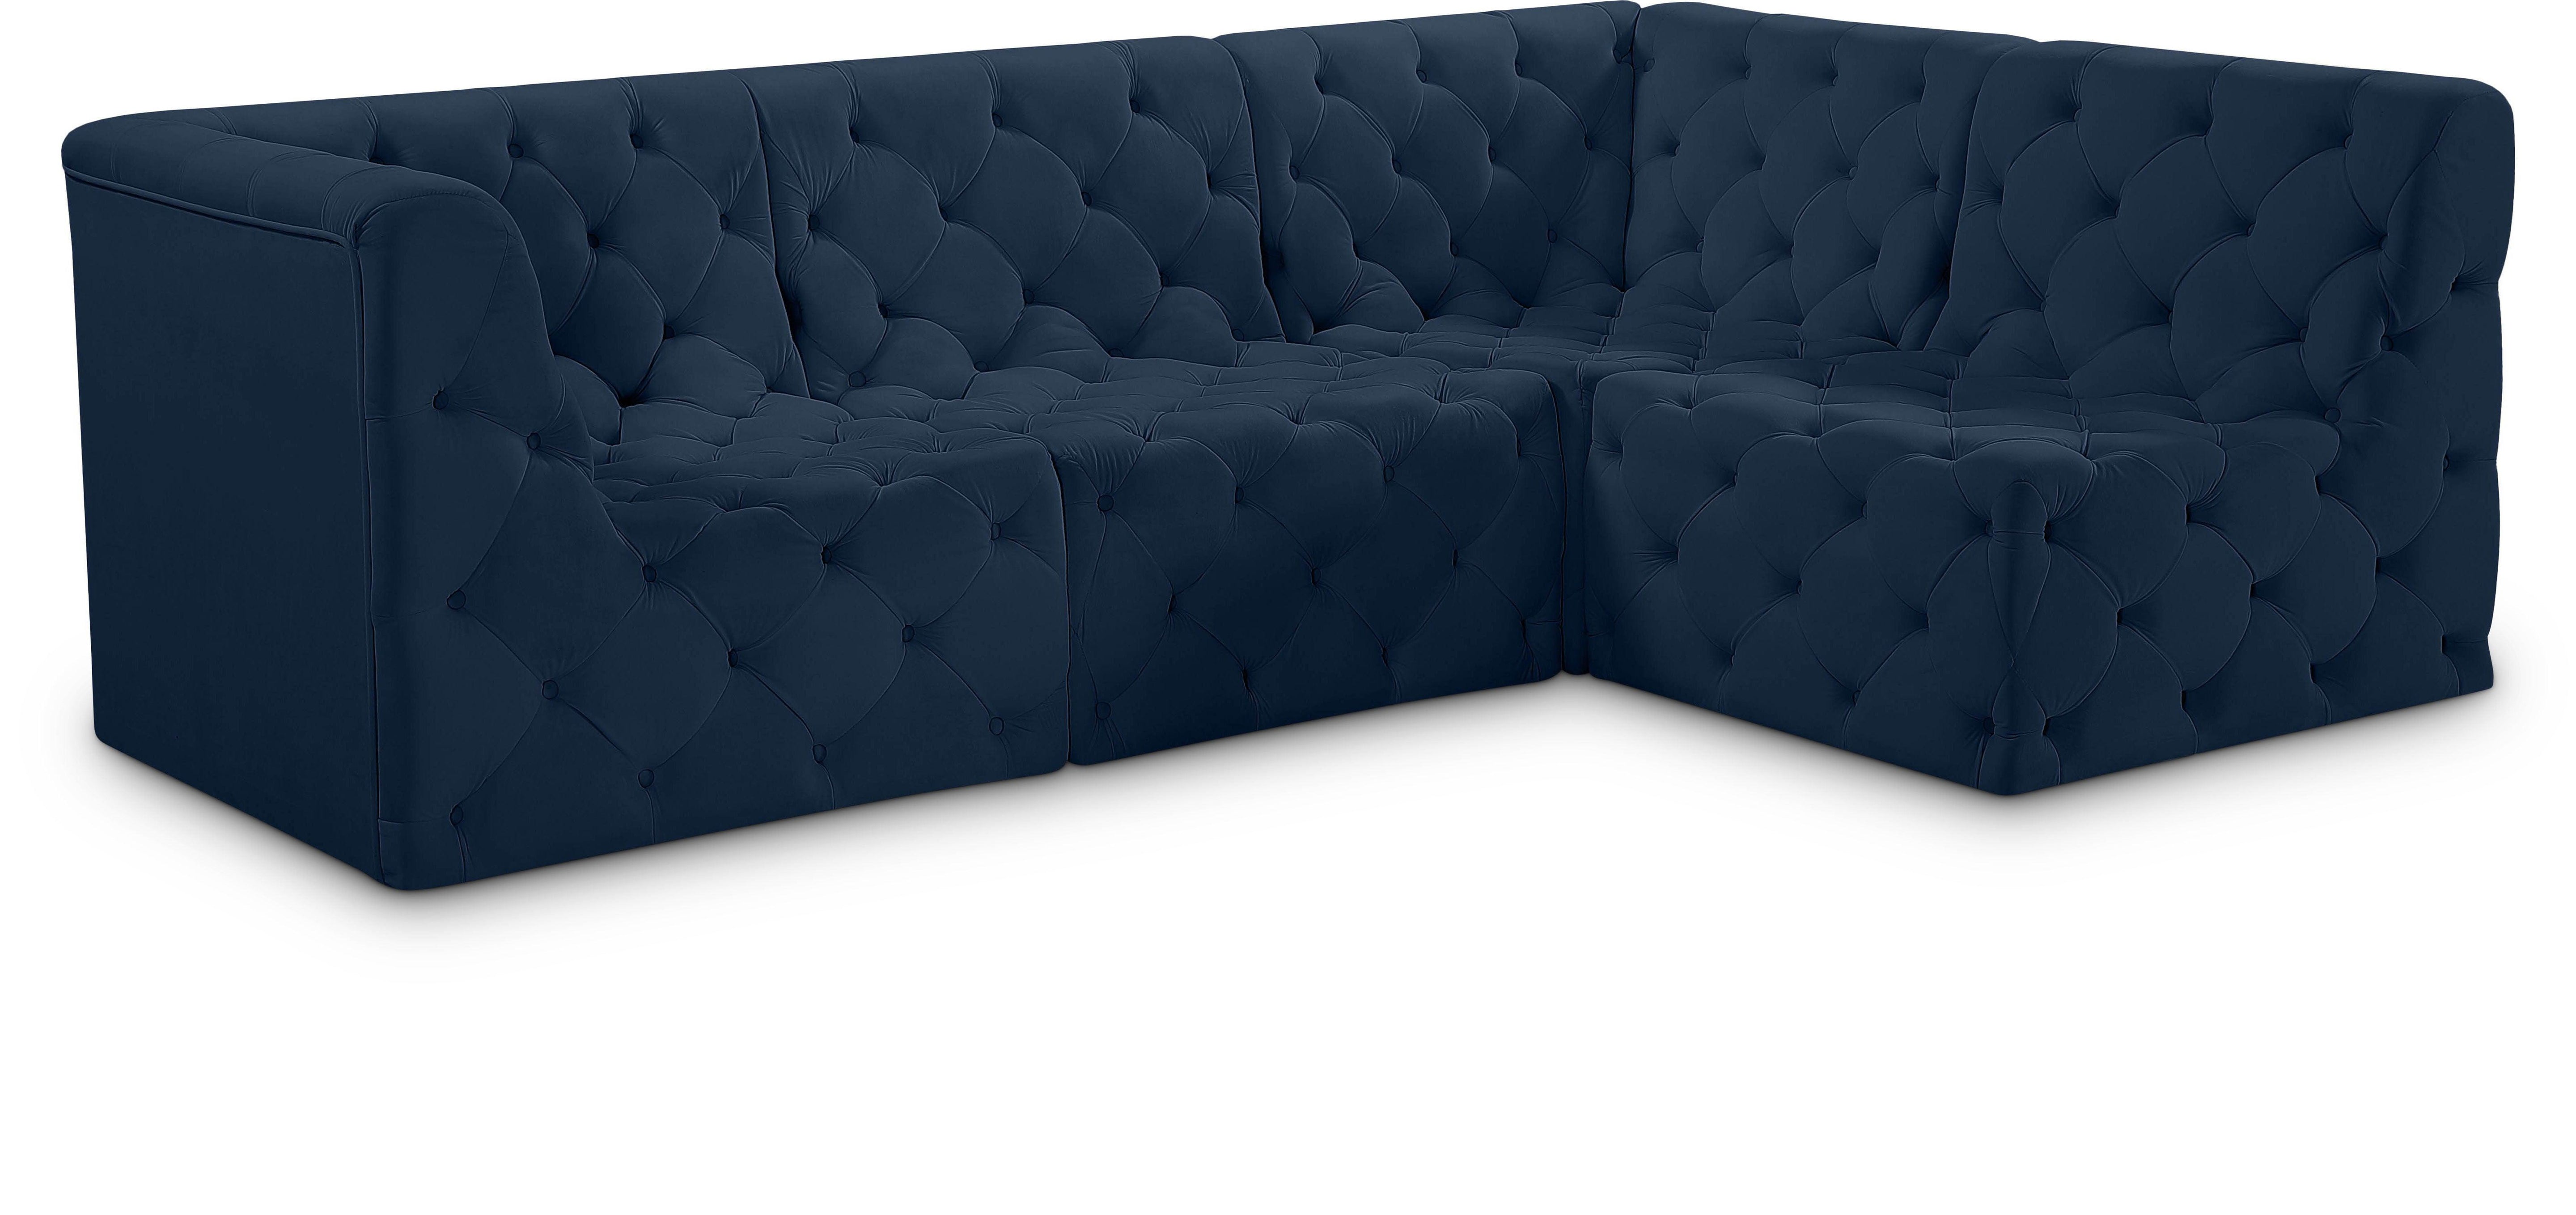 Meridian Furniture - Tuft - Modular Sectional 4 Piece - Navy - 5th Avenue Furniture